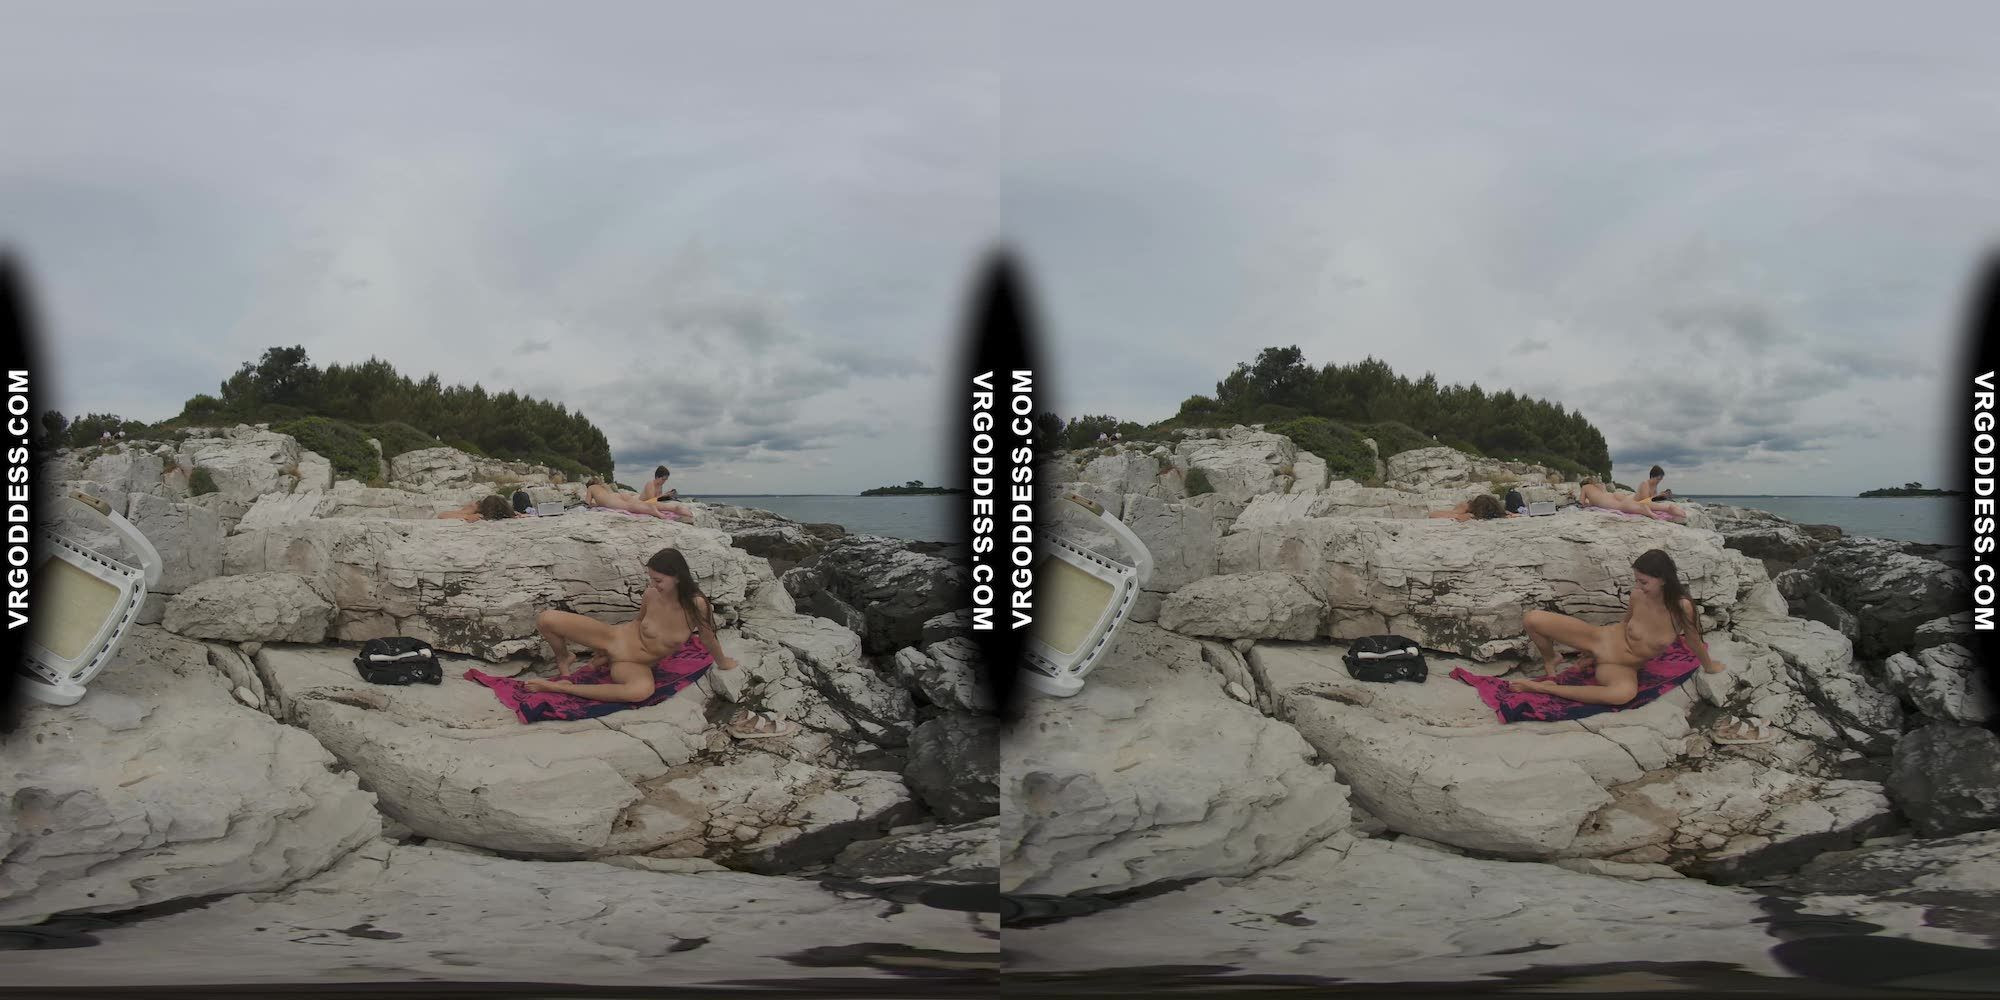 Bombshell Nude Beach Babe Rebeka Ruby Masturbates With Dildo Risky Public Jilling... Slideshow